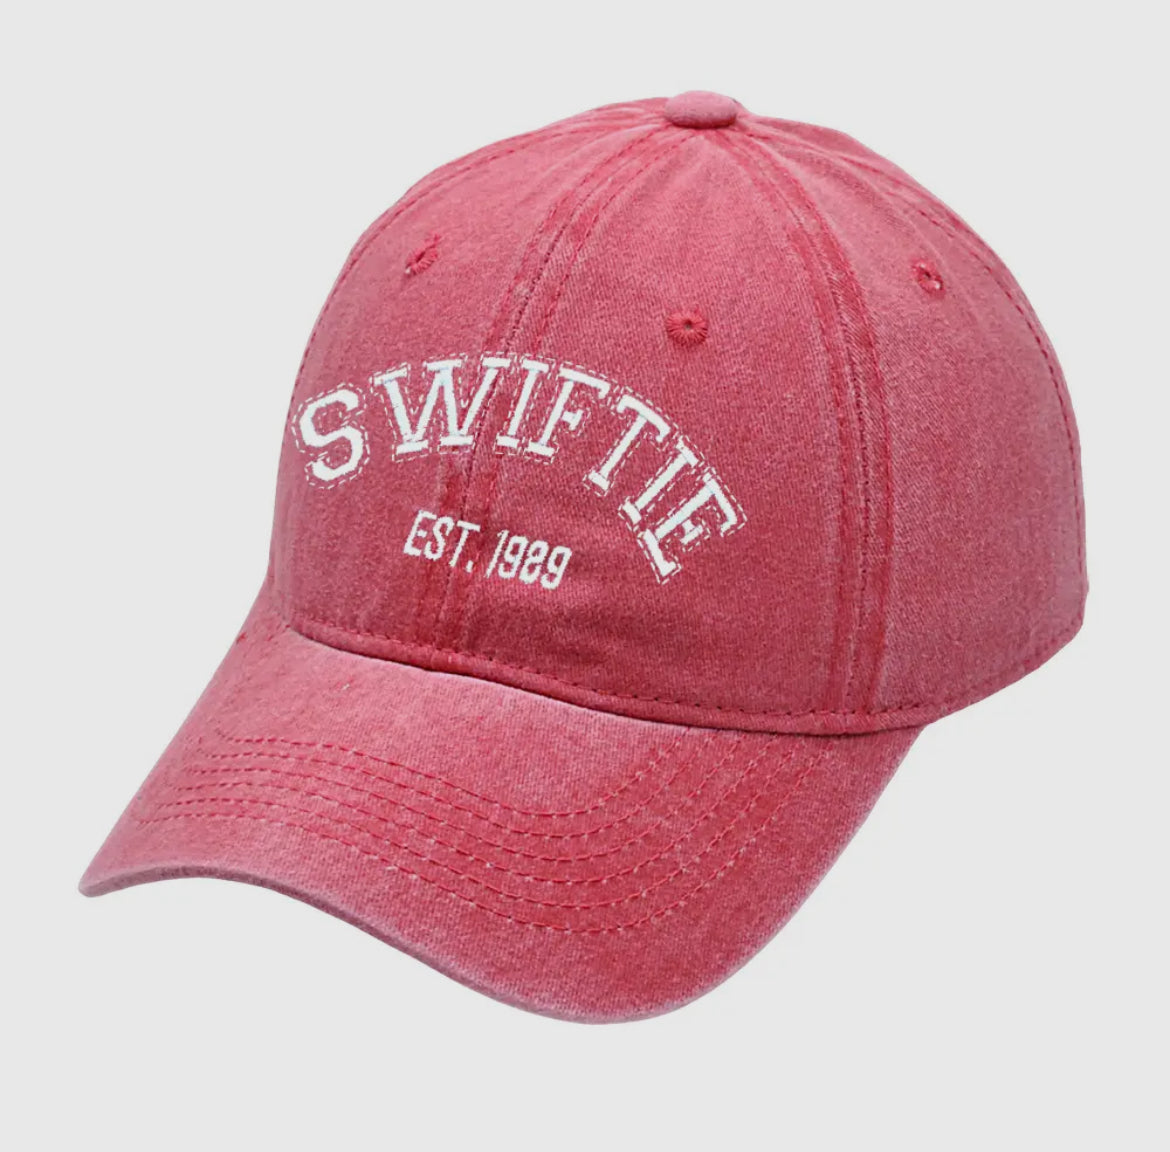 TS Baseball Cap Embroidered “Swiftie”